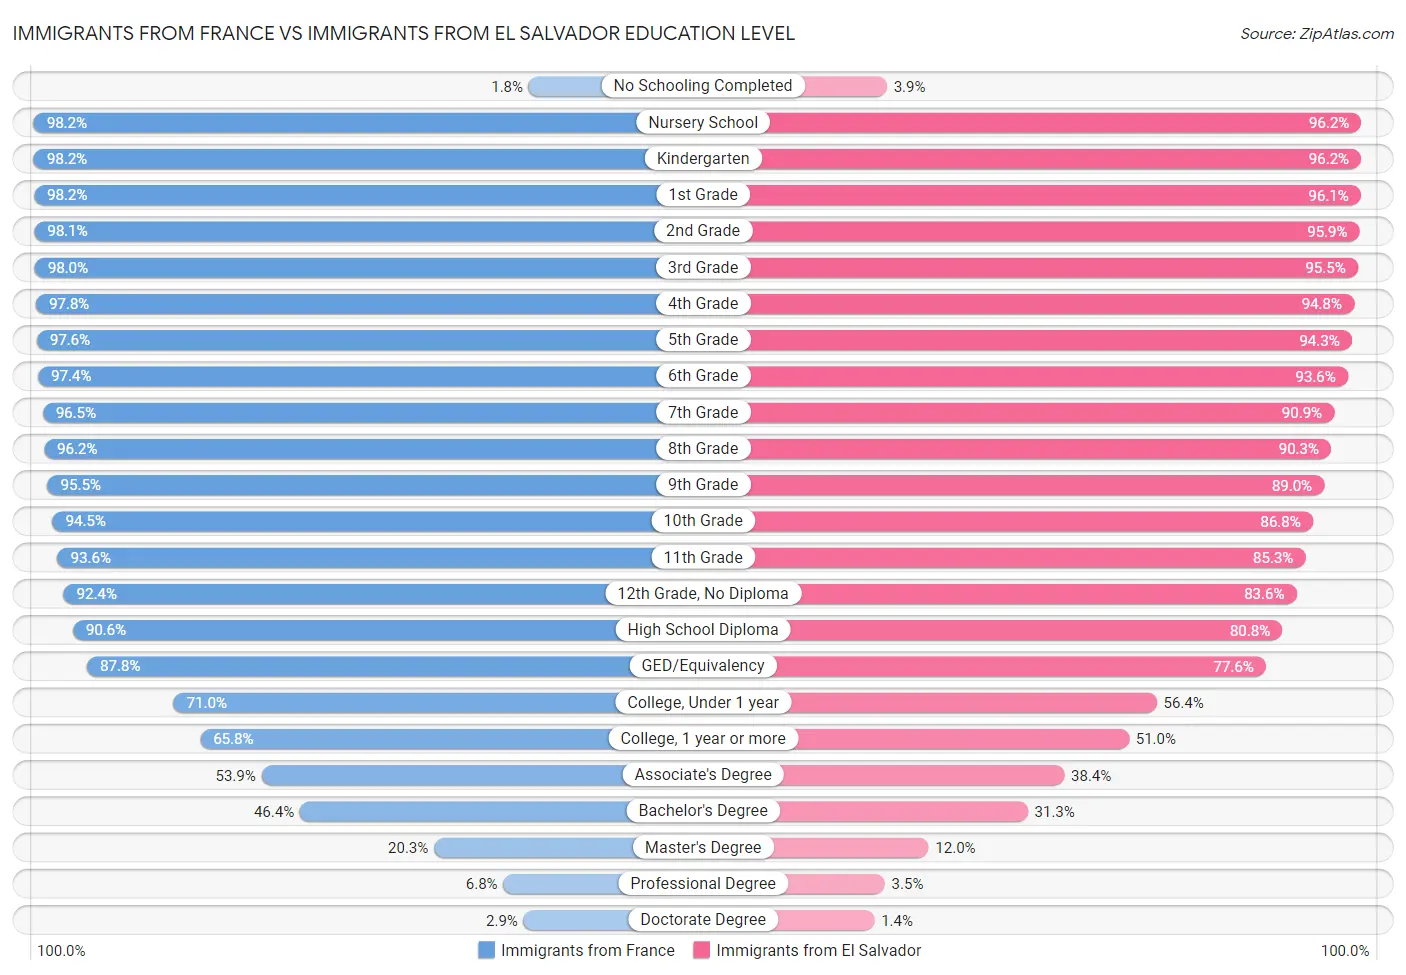 Immigrants from France vs Immigrants from El Salvador Education Level